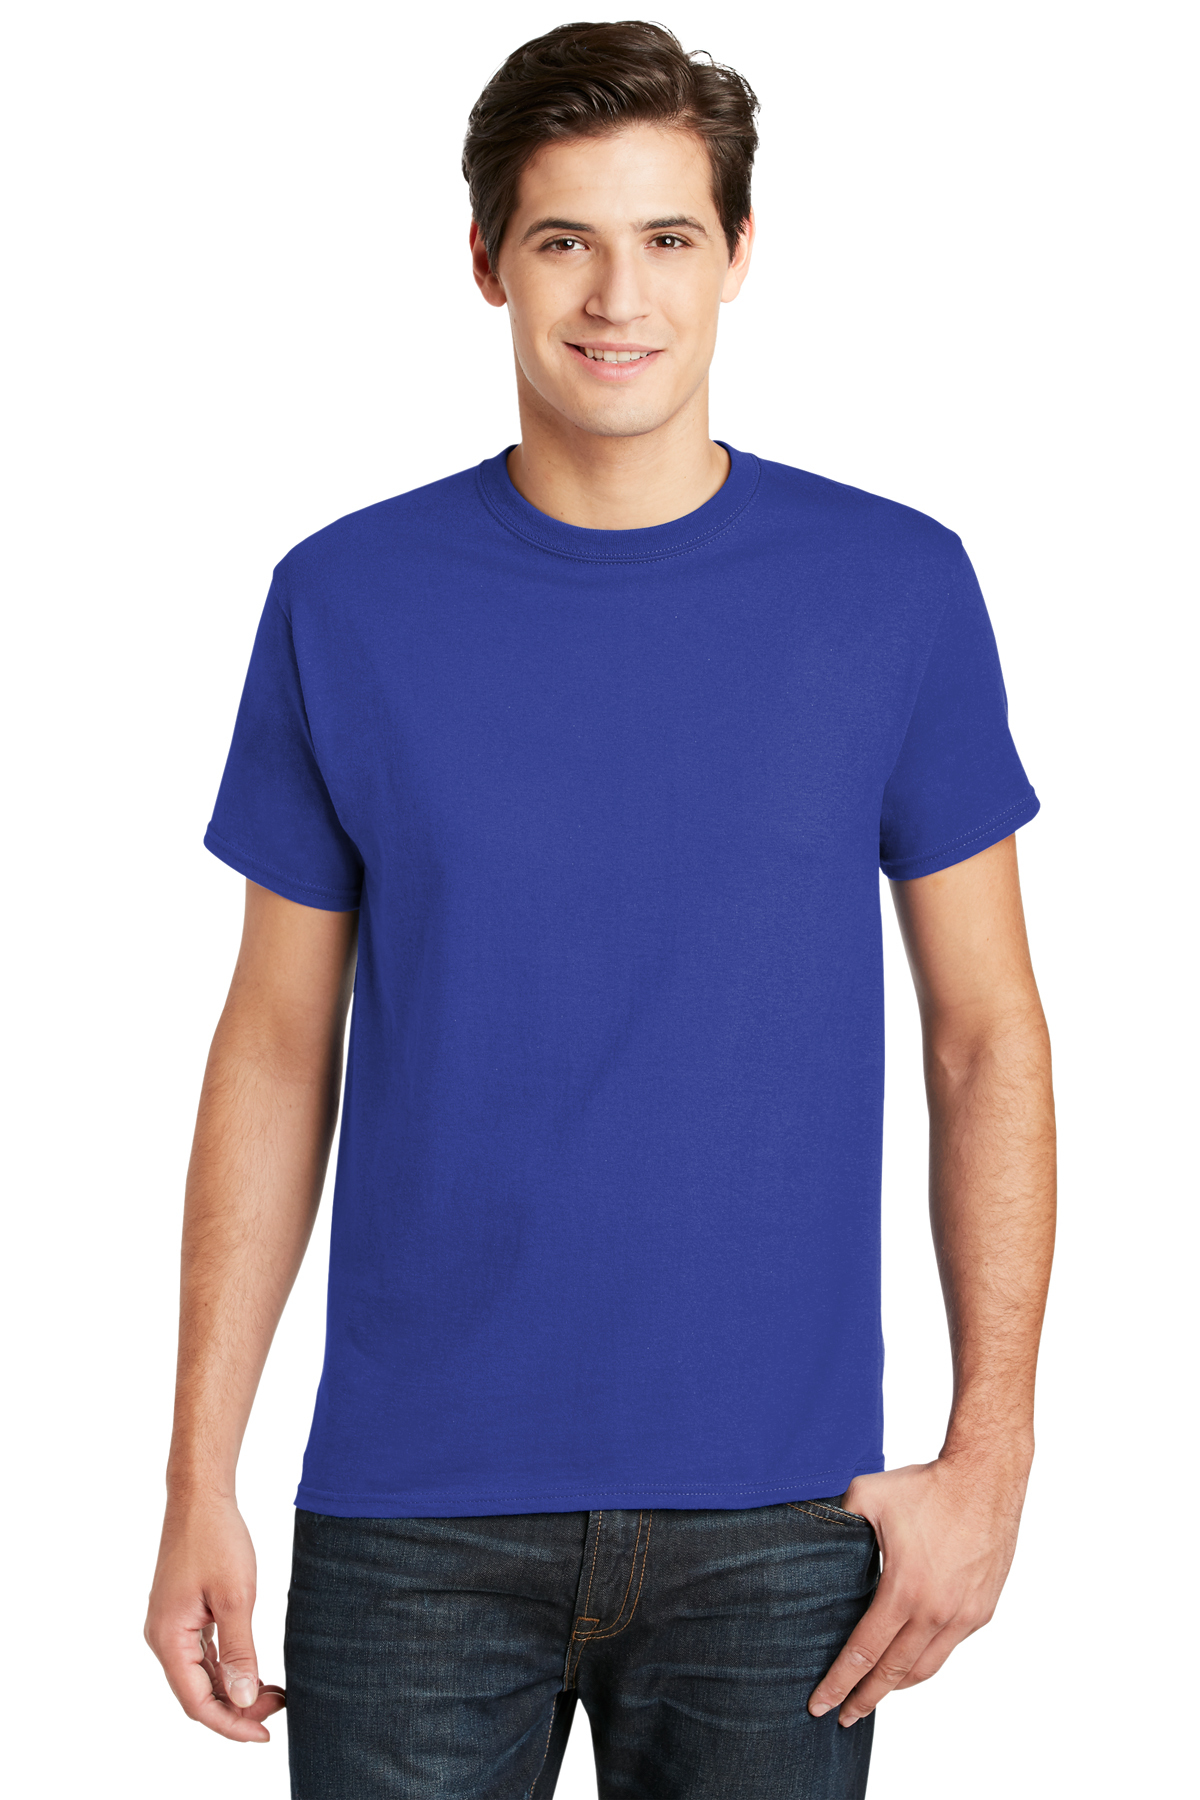 Hanes - Essential-T 100% Cotton T-Shirt | Product | SanMar